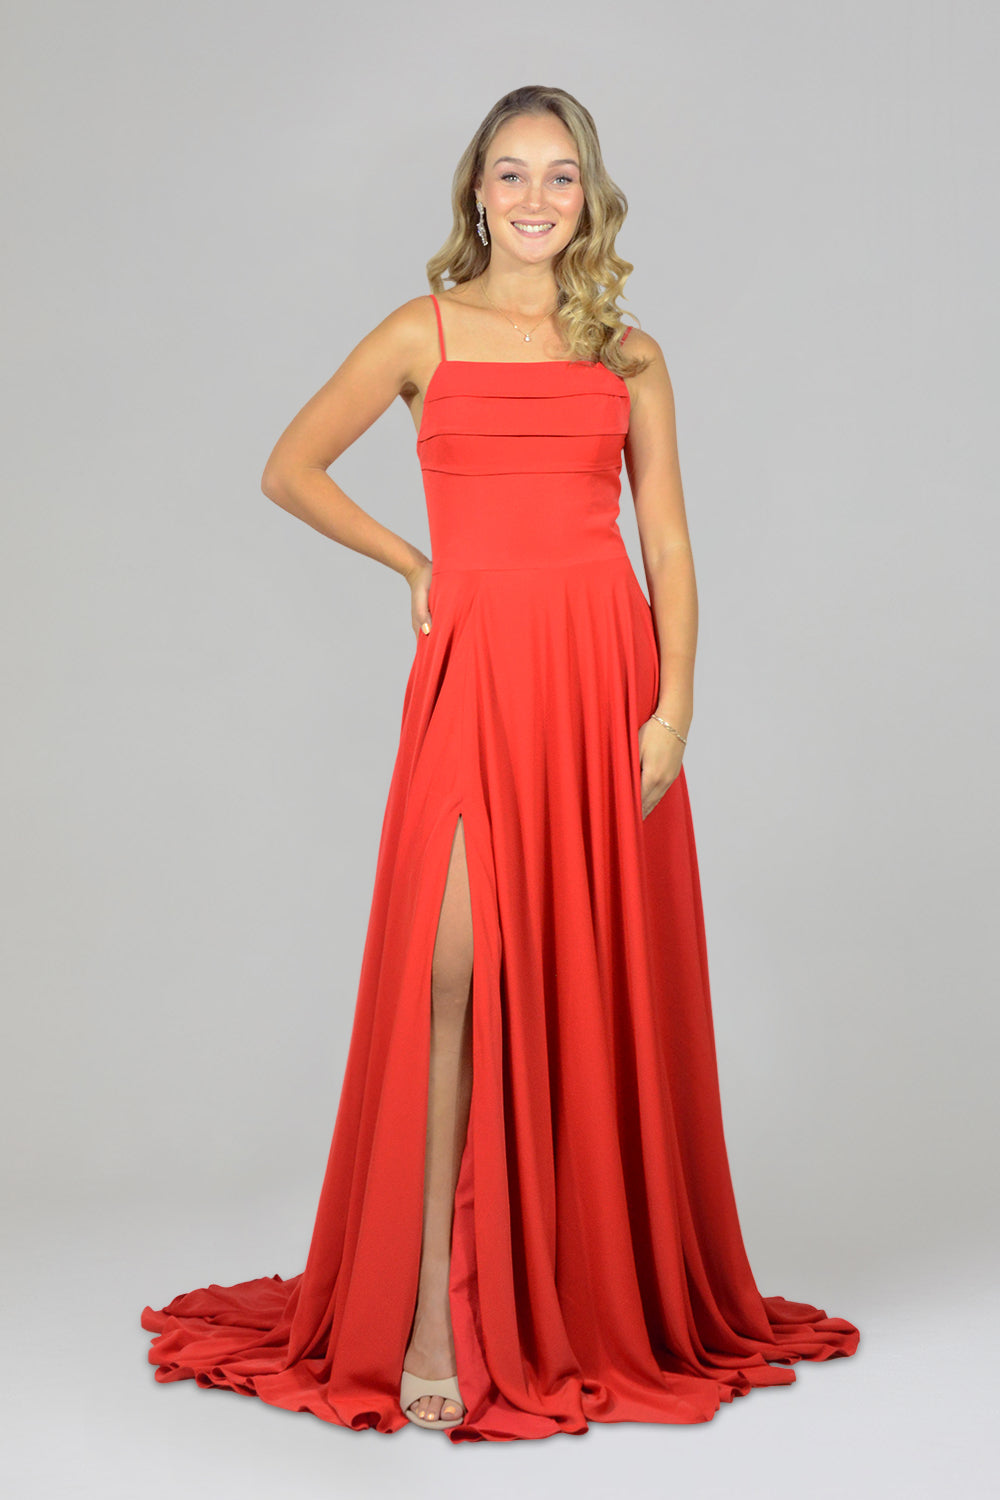 custom made red bridesmaid dresses flowy style perth australia envious bridal & formal